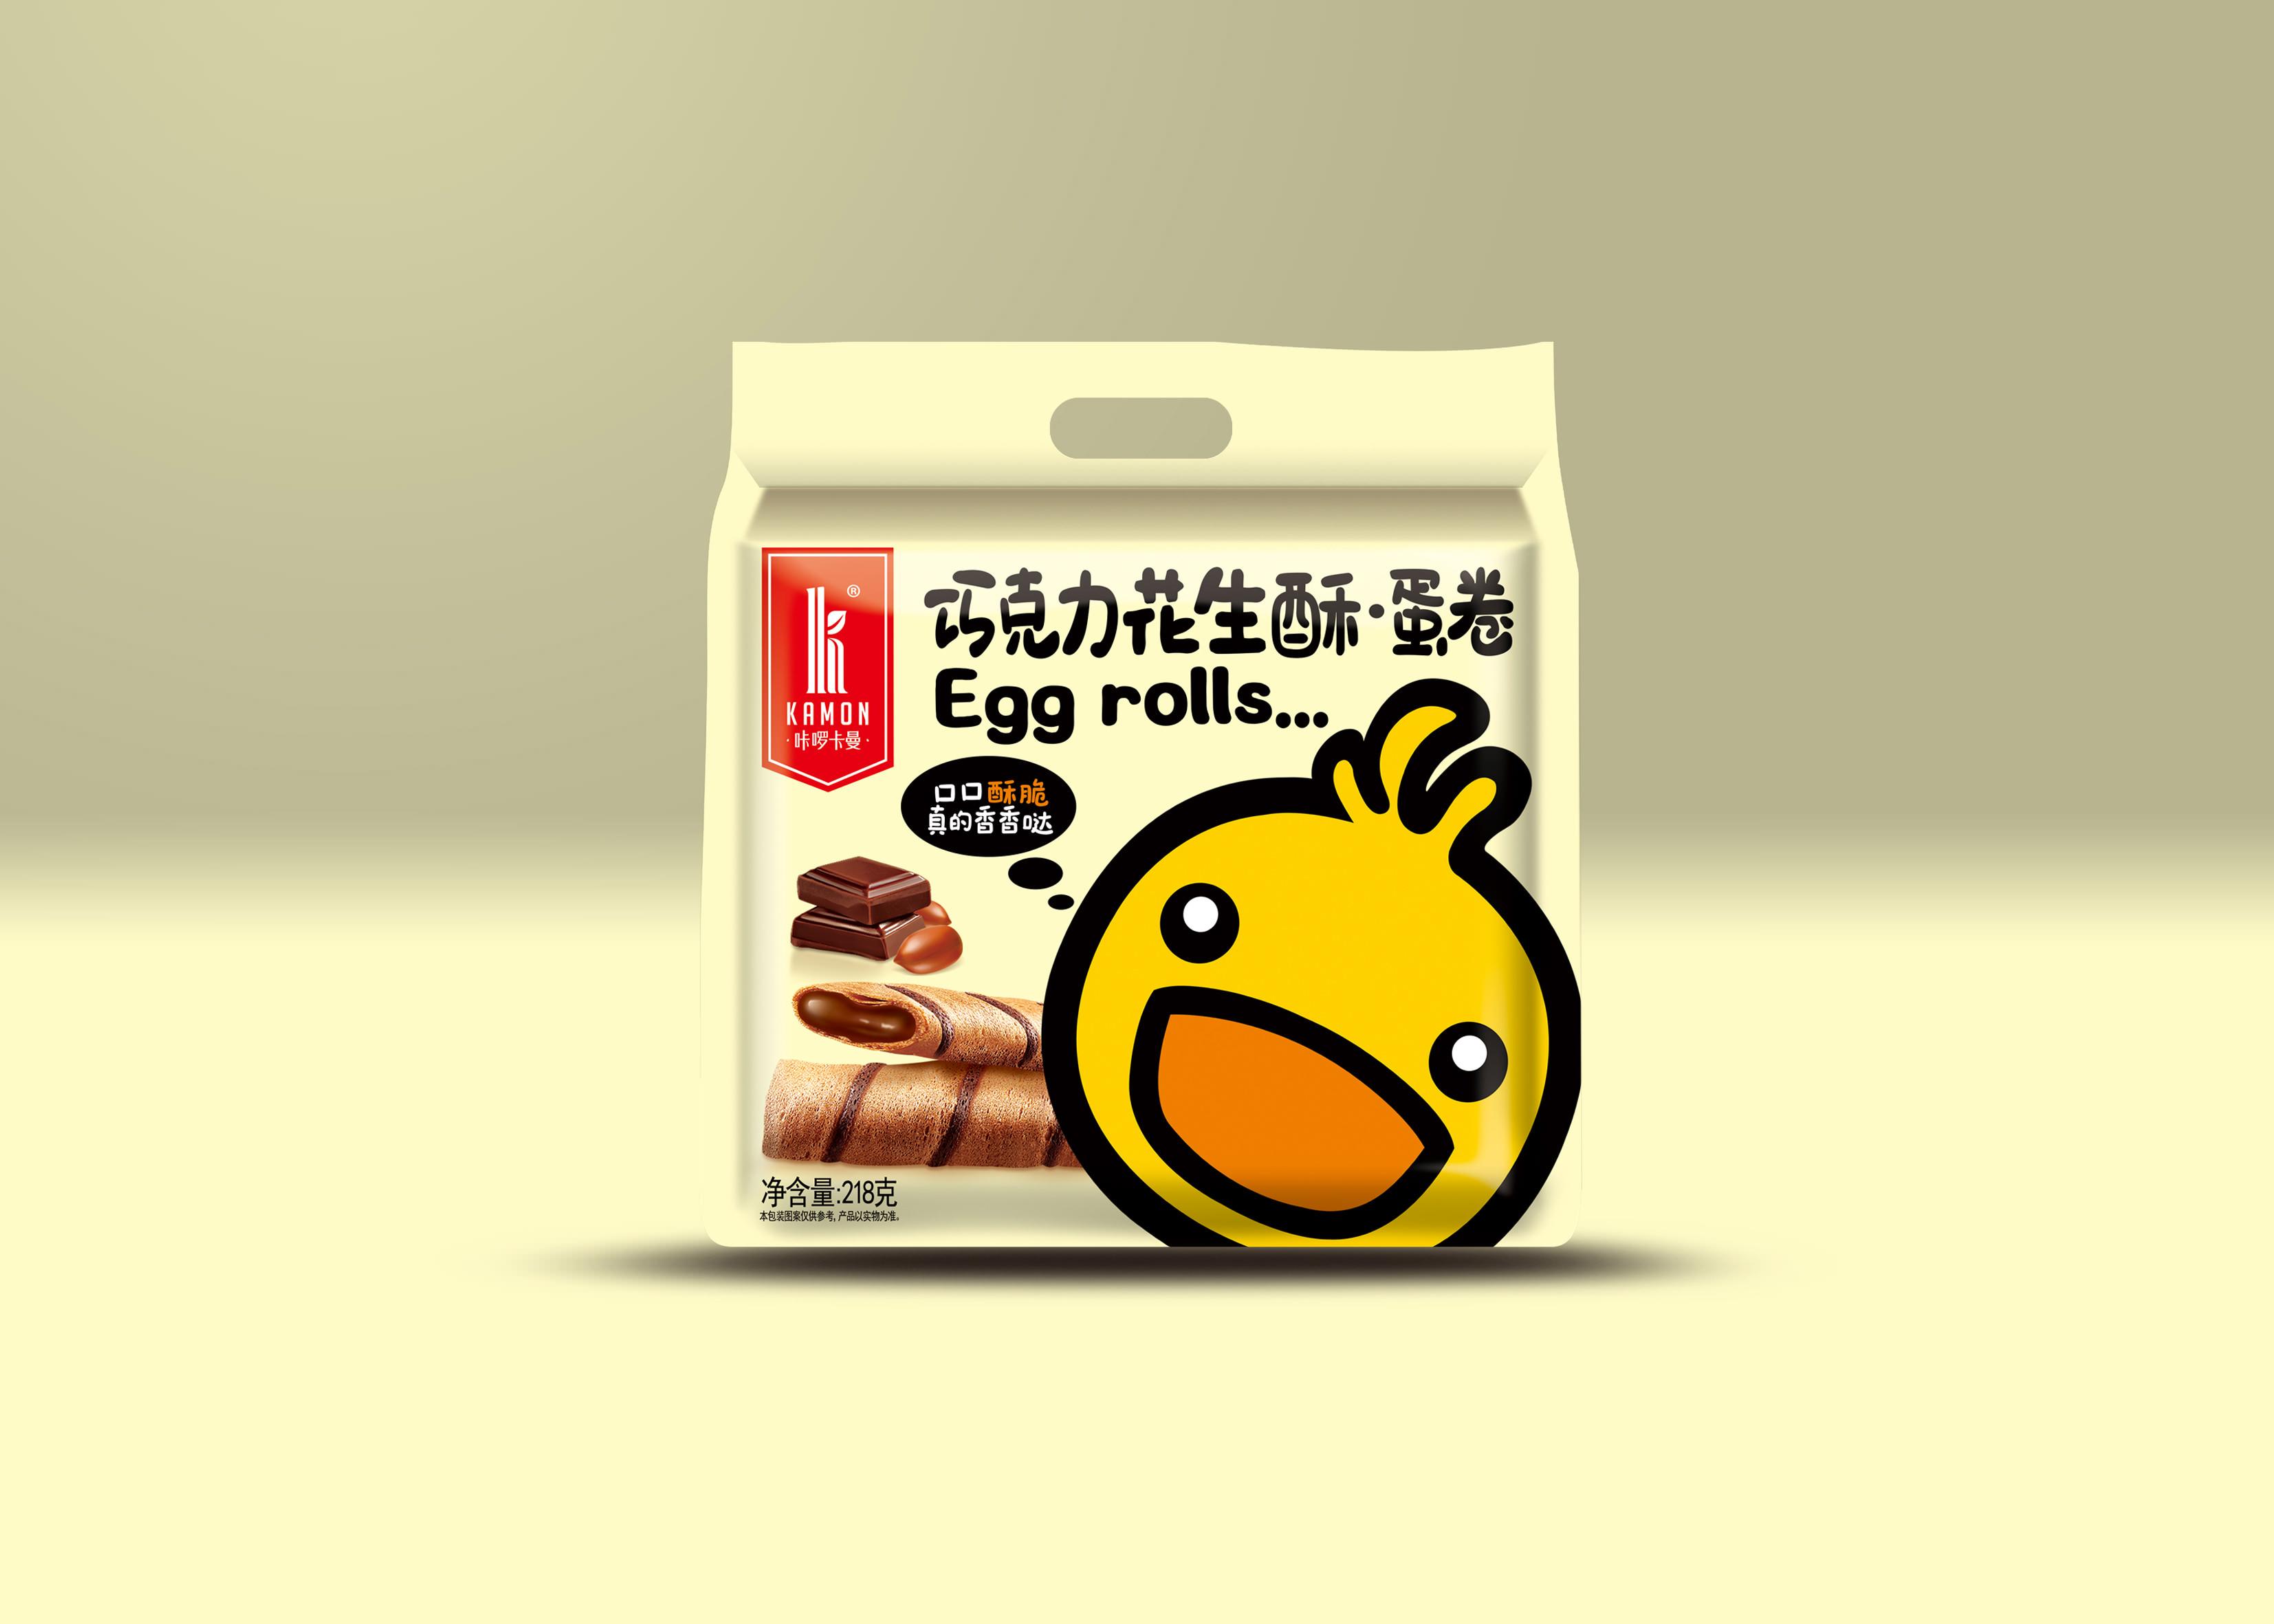 kaman-egg-rolls-chocolate-peanut-flavor-pack